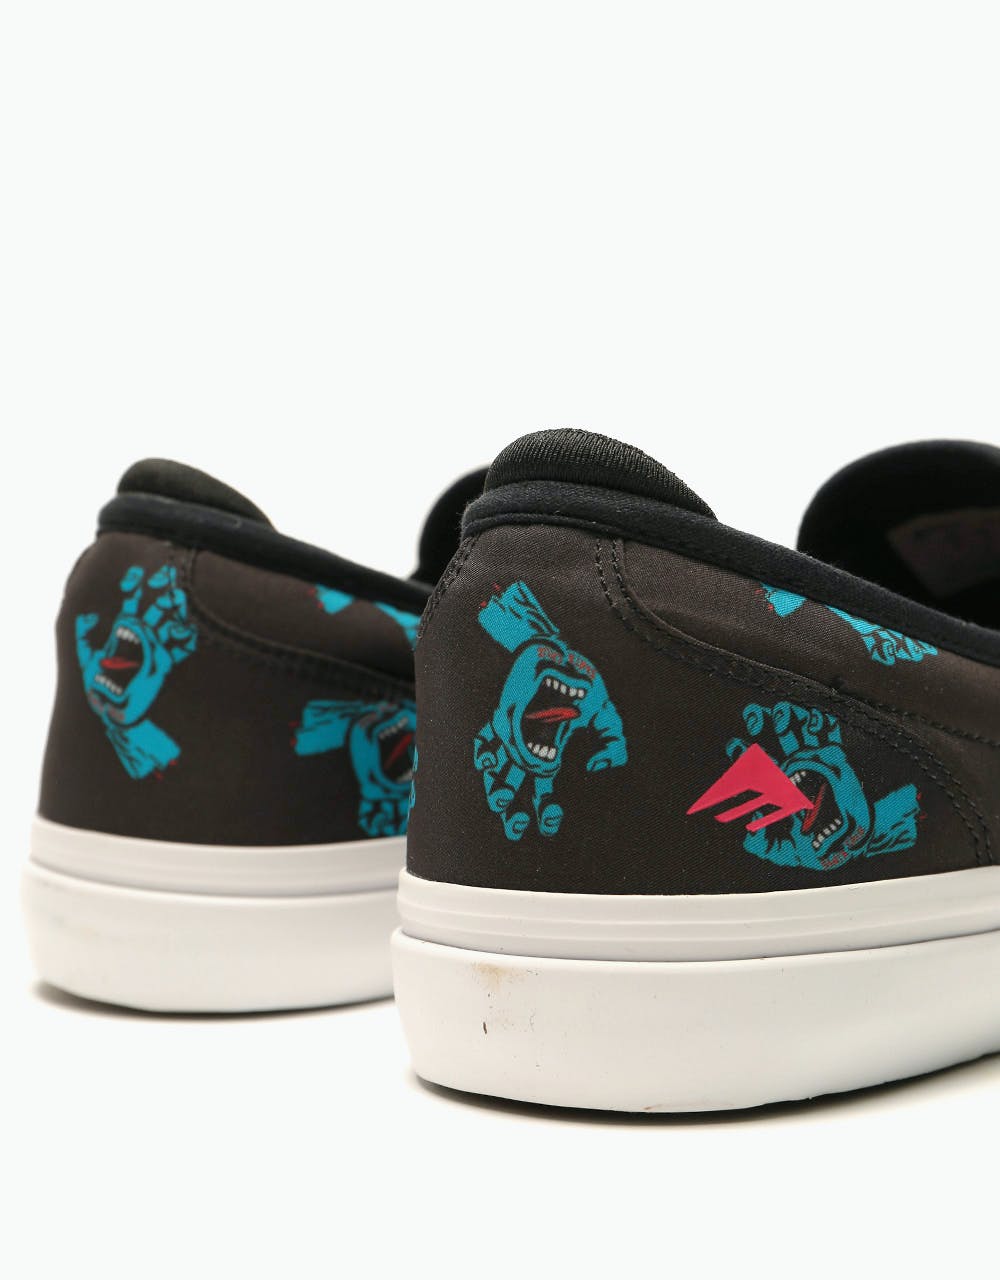 Emerica x Santa Cruz Wino G6 Slip-On Skate Shoes - Blue/Black